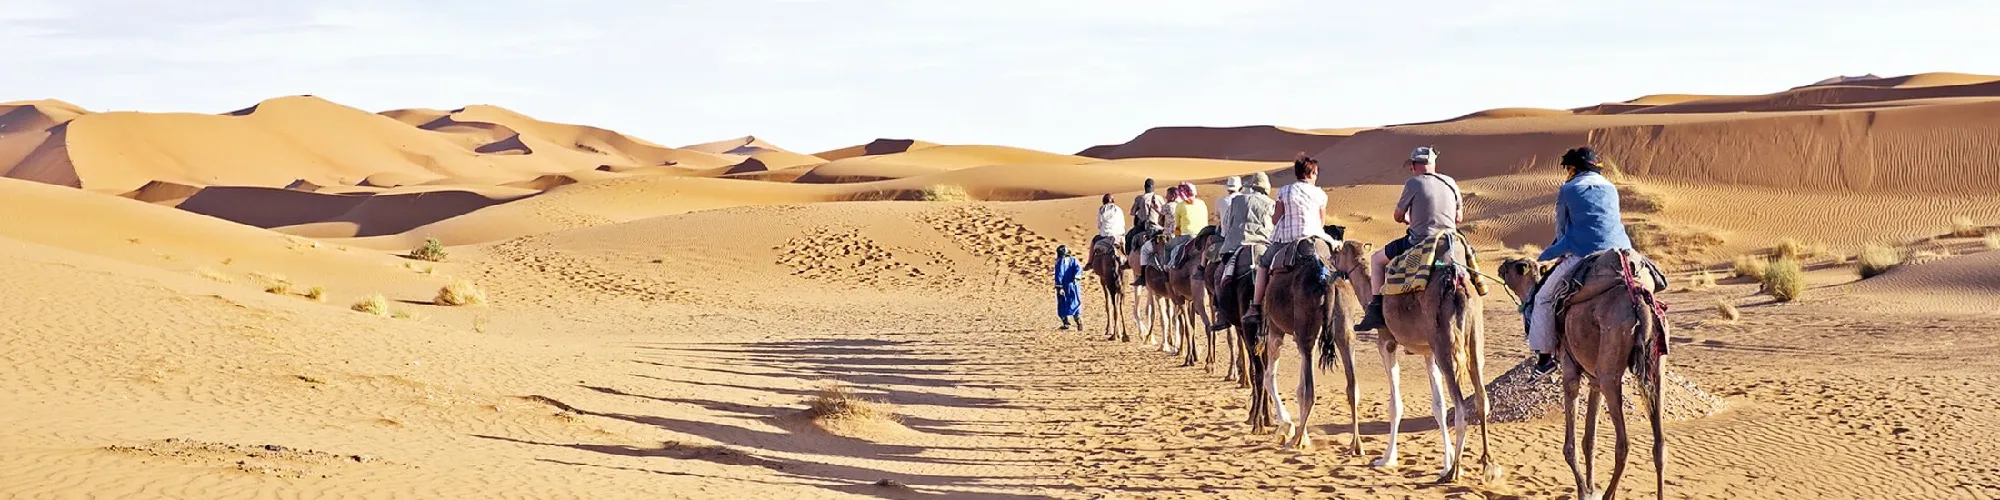 Urlaub in Marokko background image